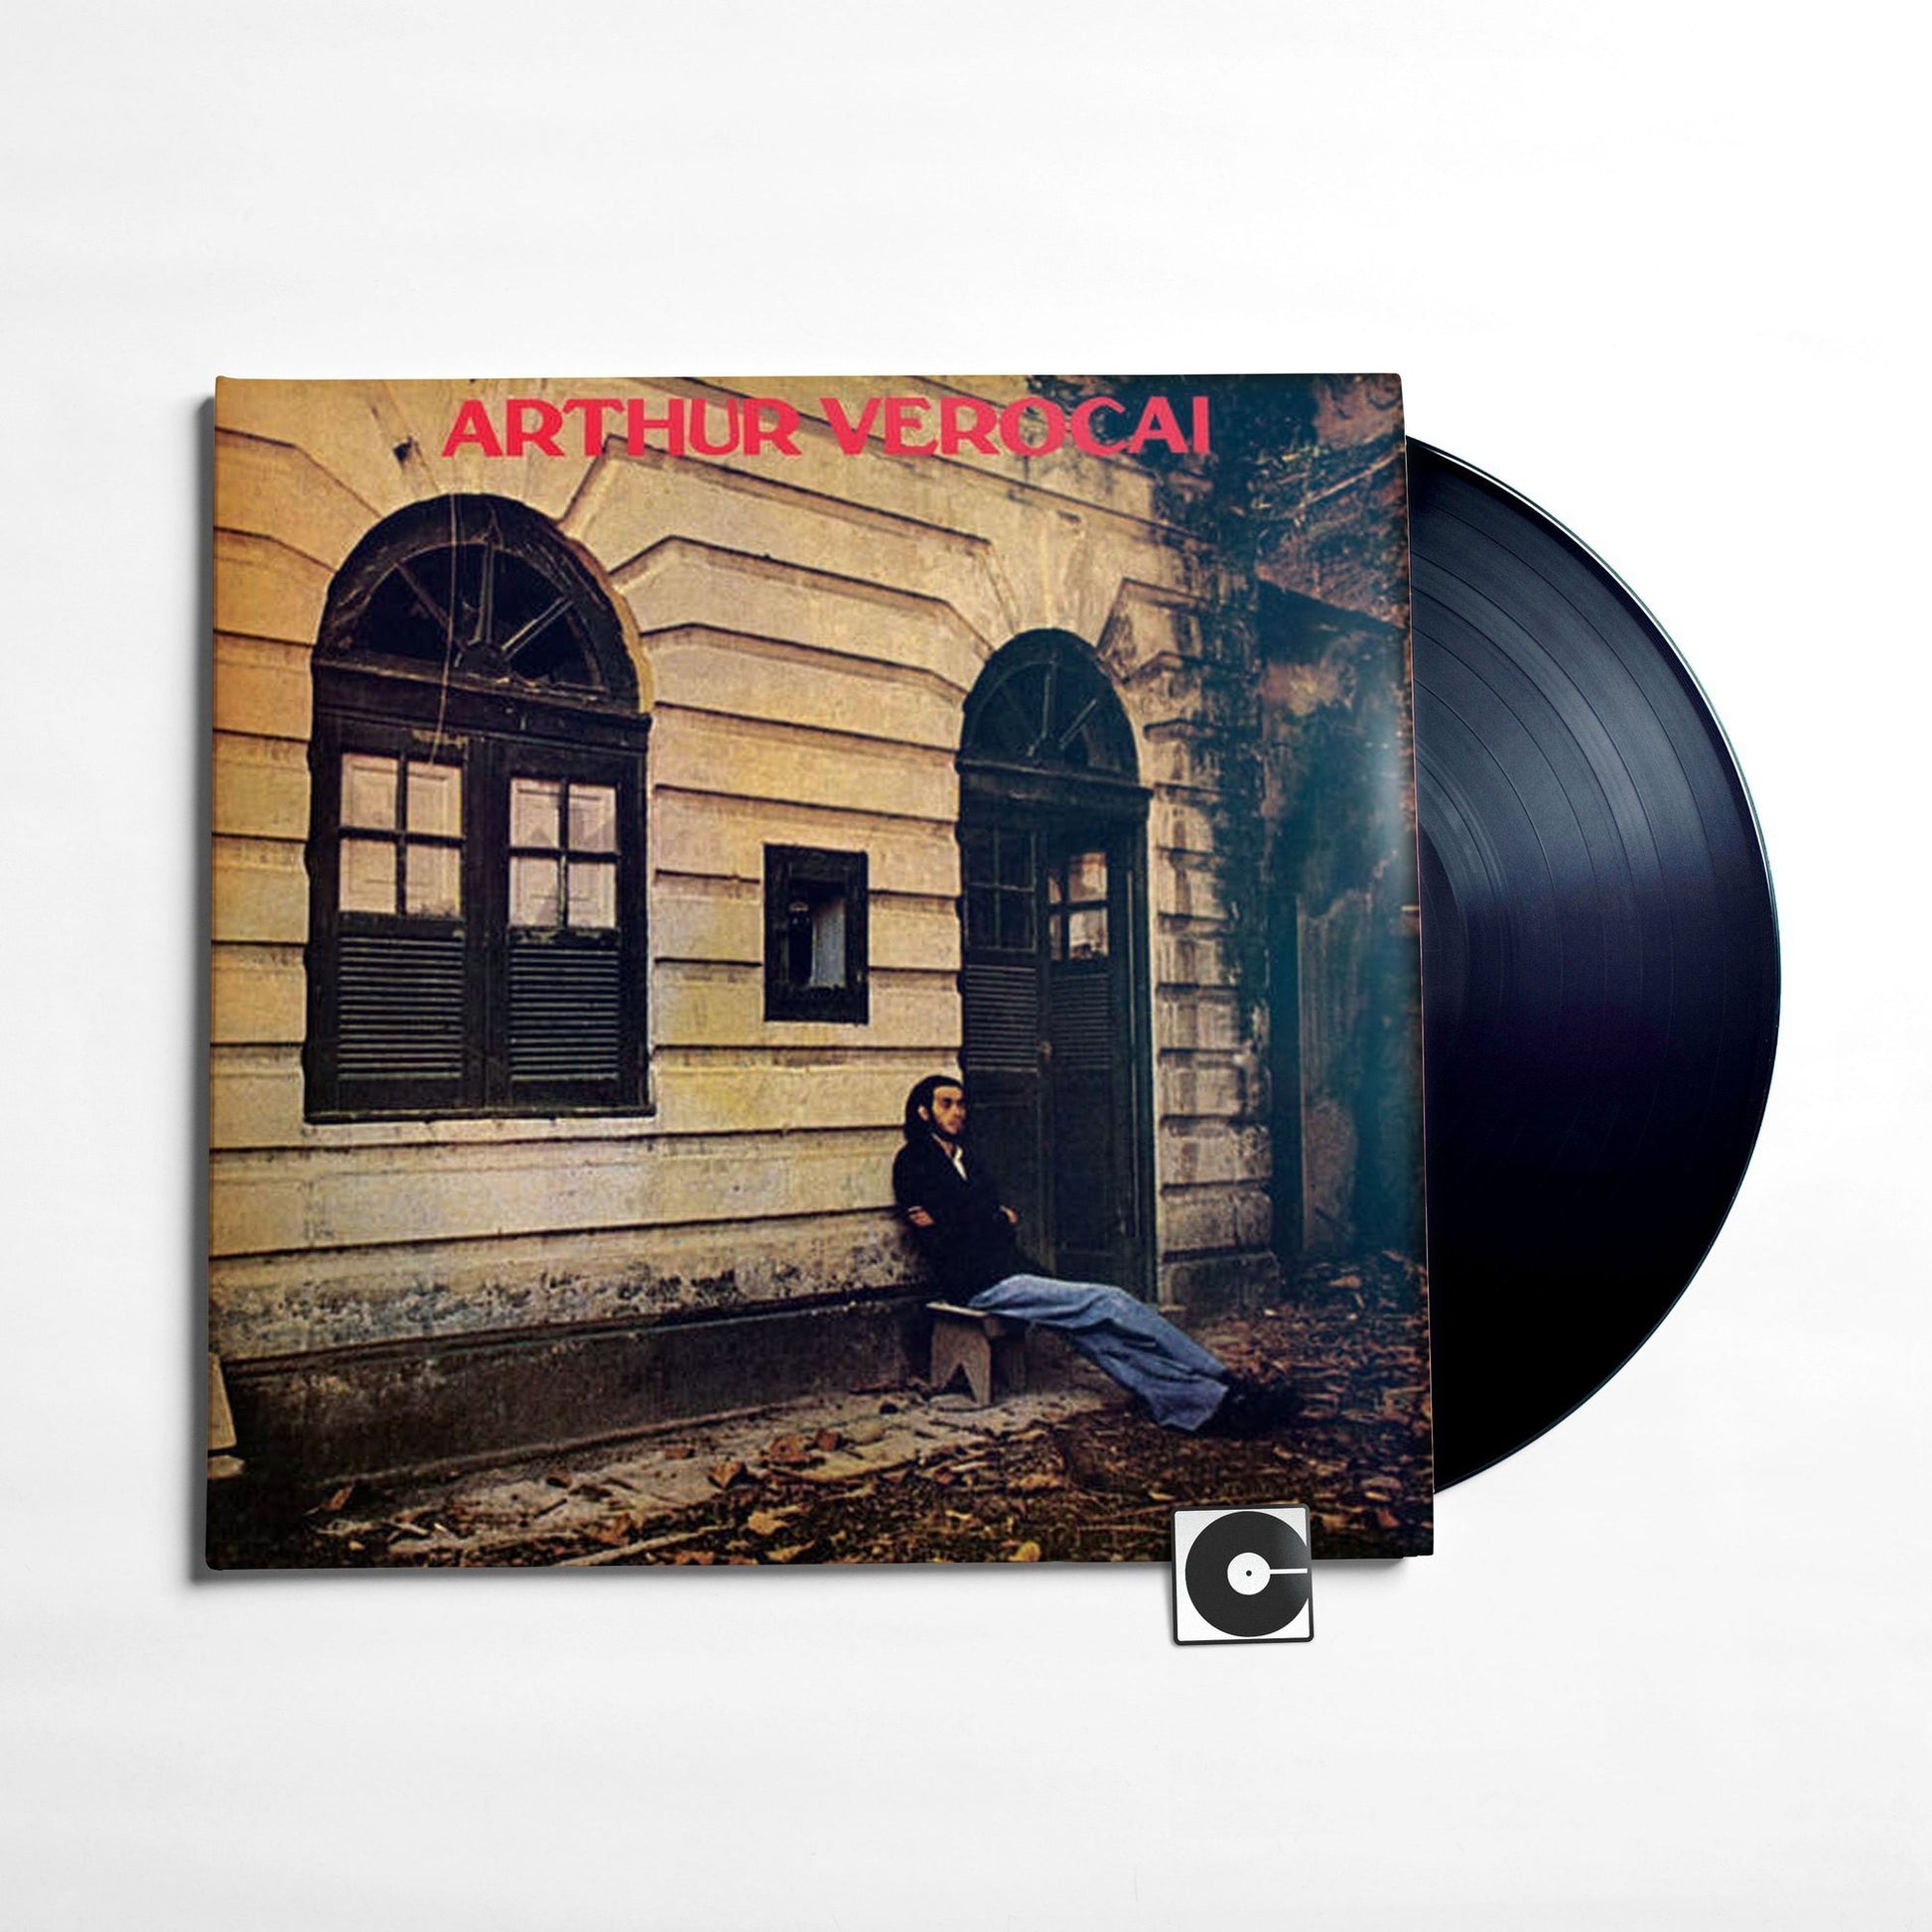 ARTHUR VEROCAI ARTHUR VEROCAI [LP] NEW VINYL RECORD 7119691243818